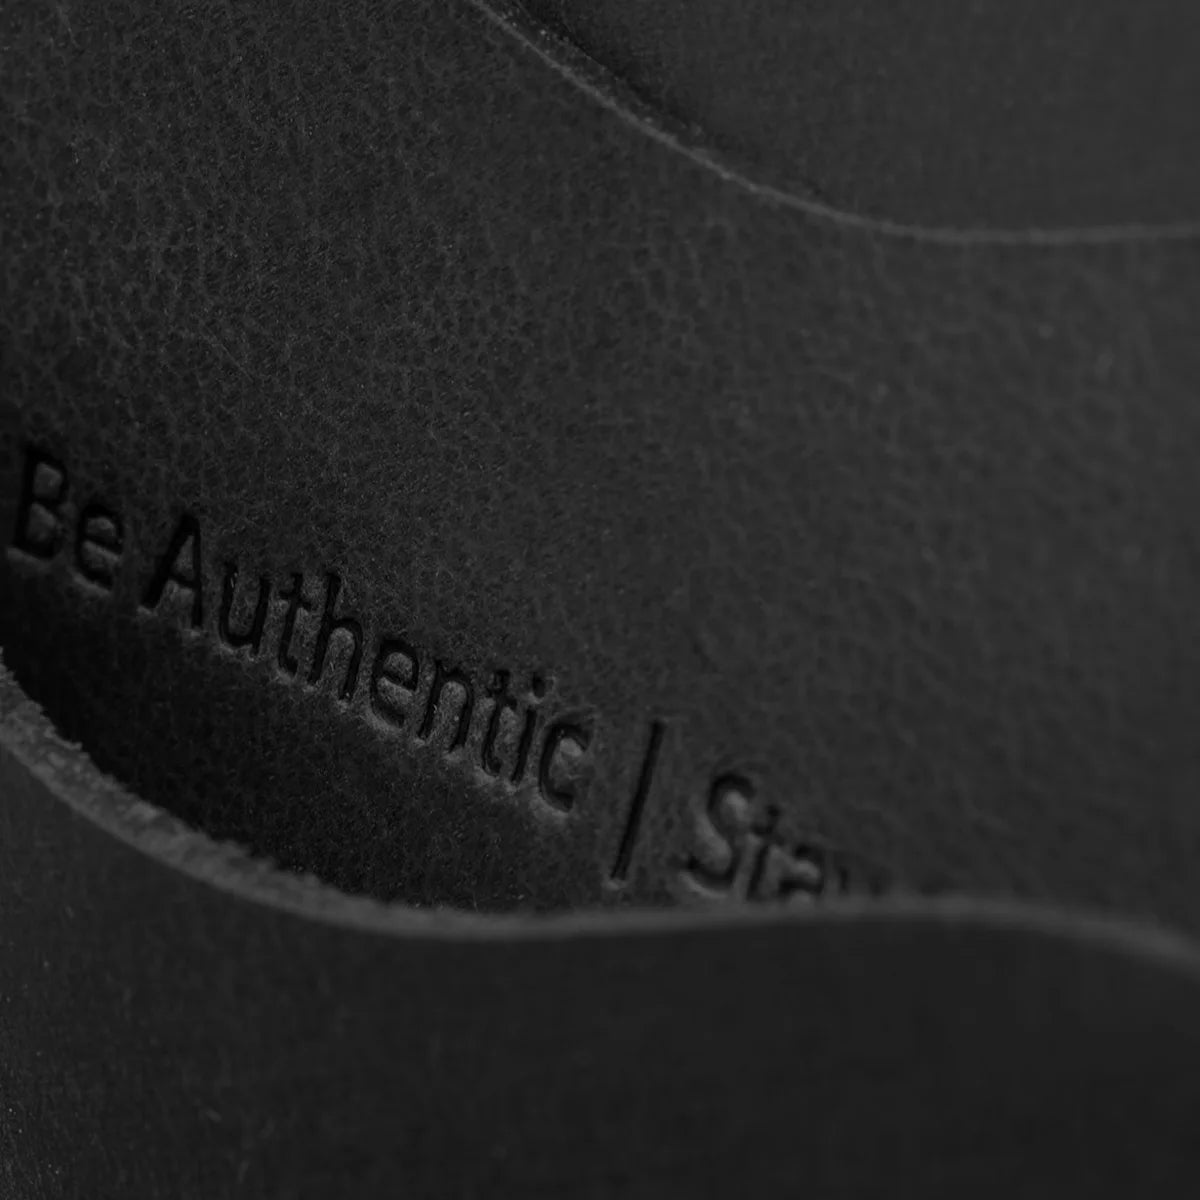 Leather Card Holder Panama+ - Black